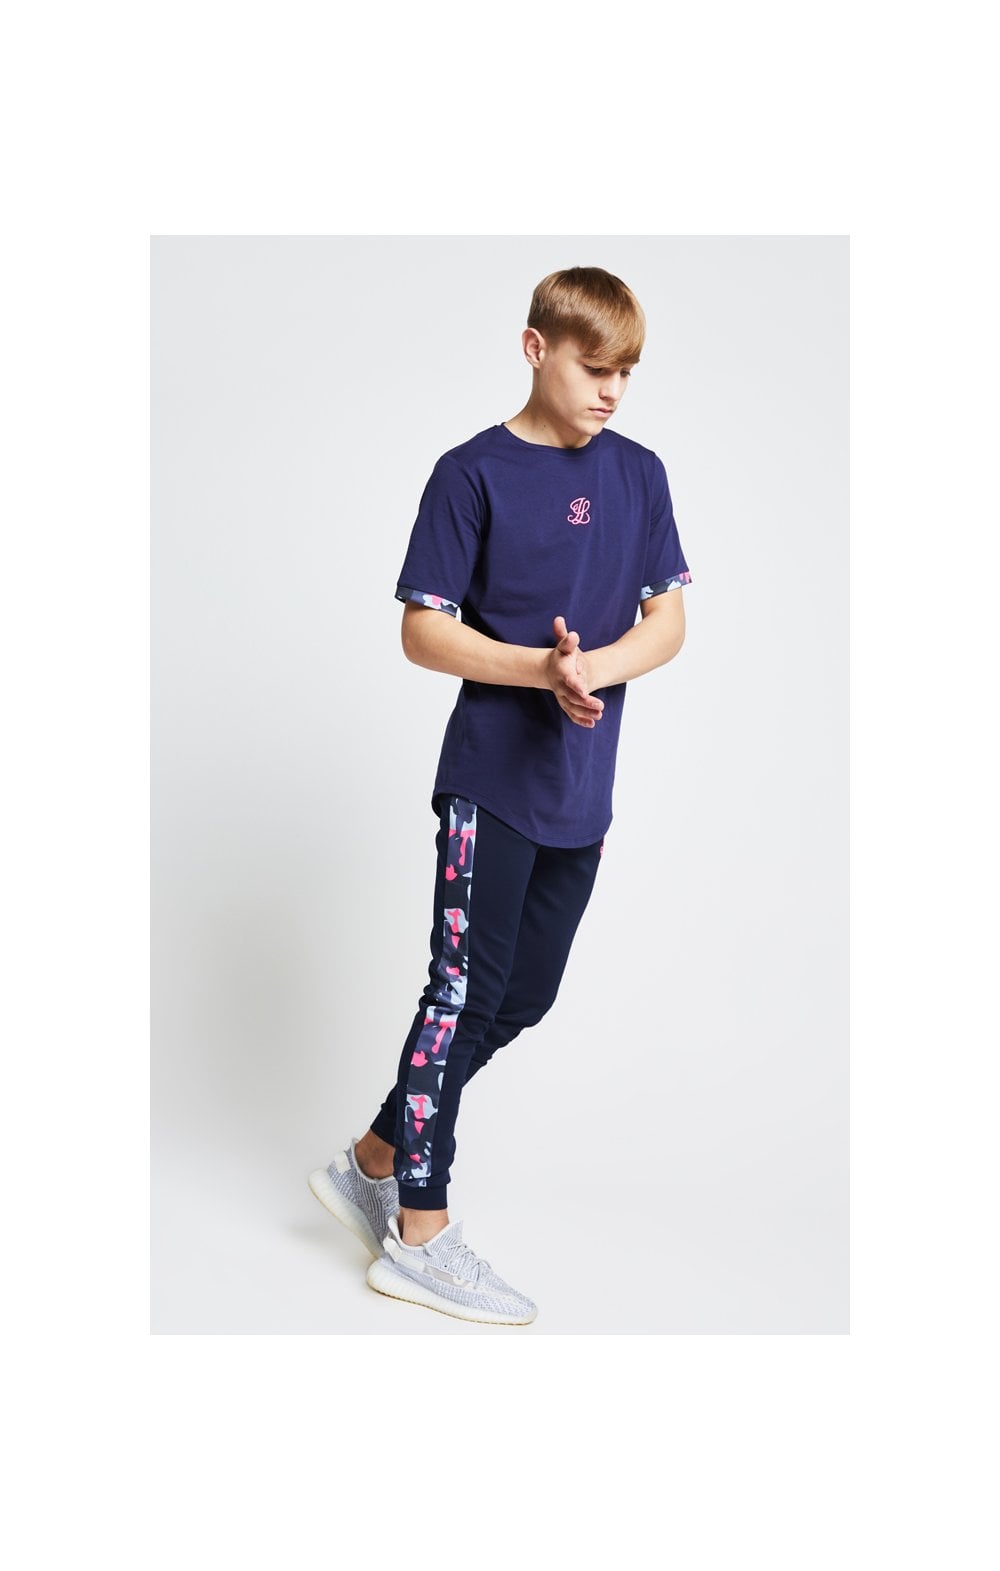 Illusive London T-Shirt Kontrast Saum - Marineblau und Neon Rosa Camouflage (4)